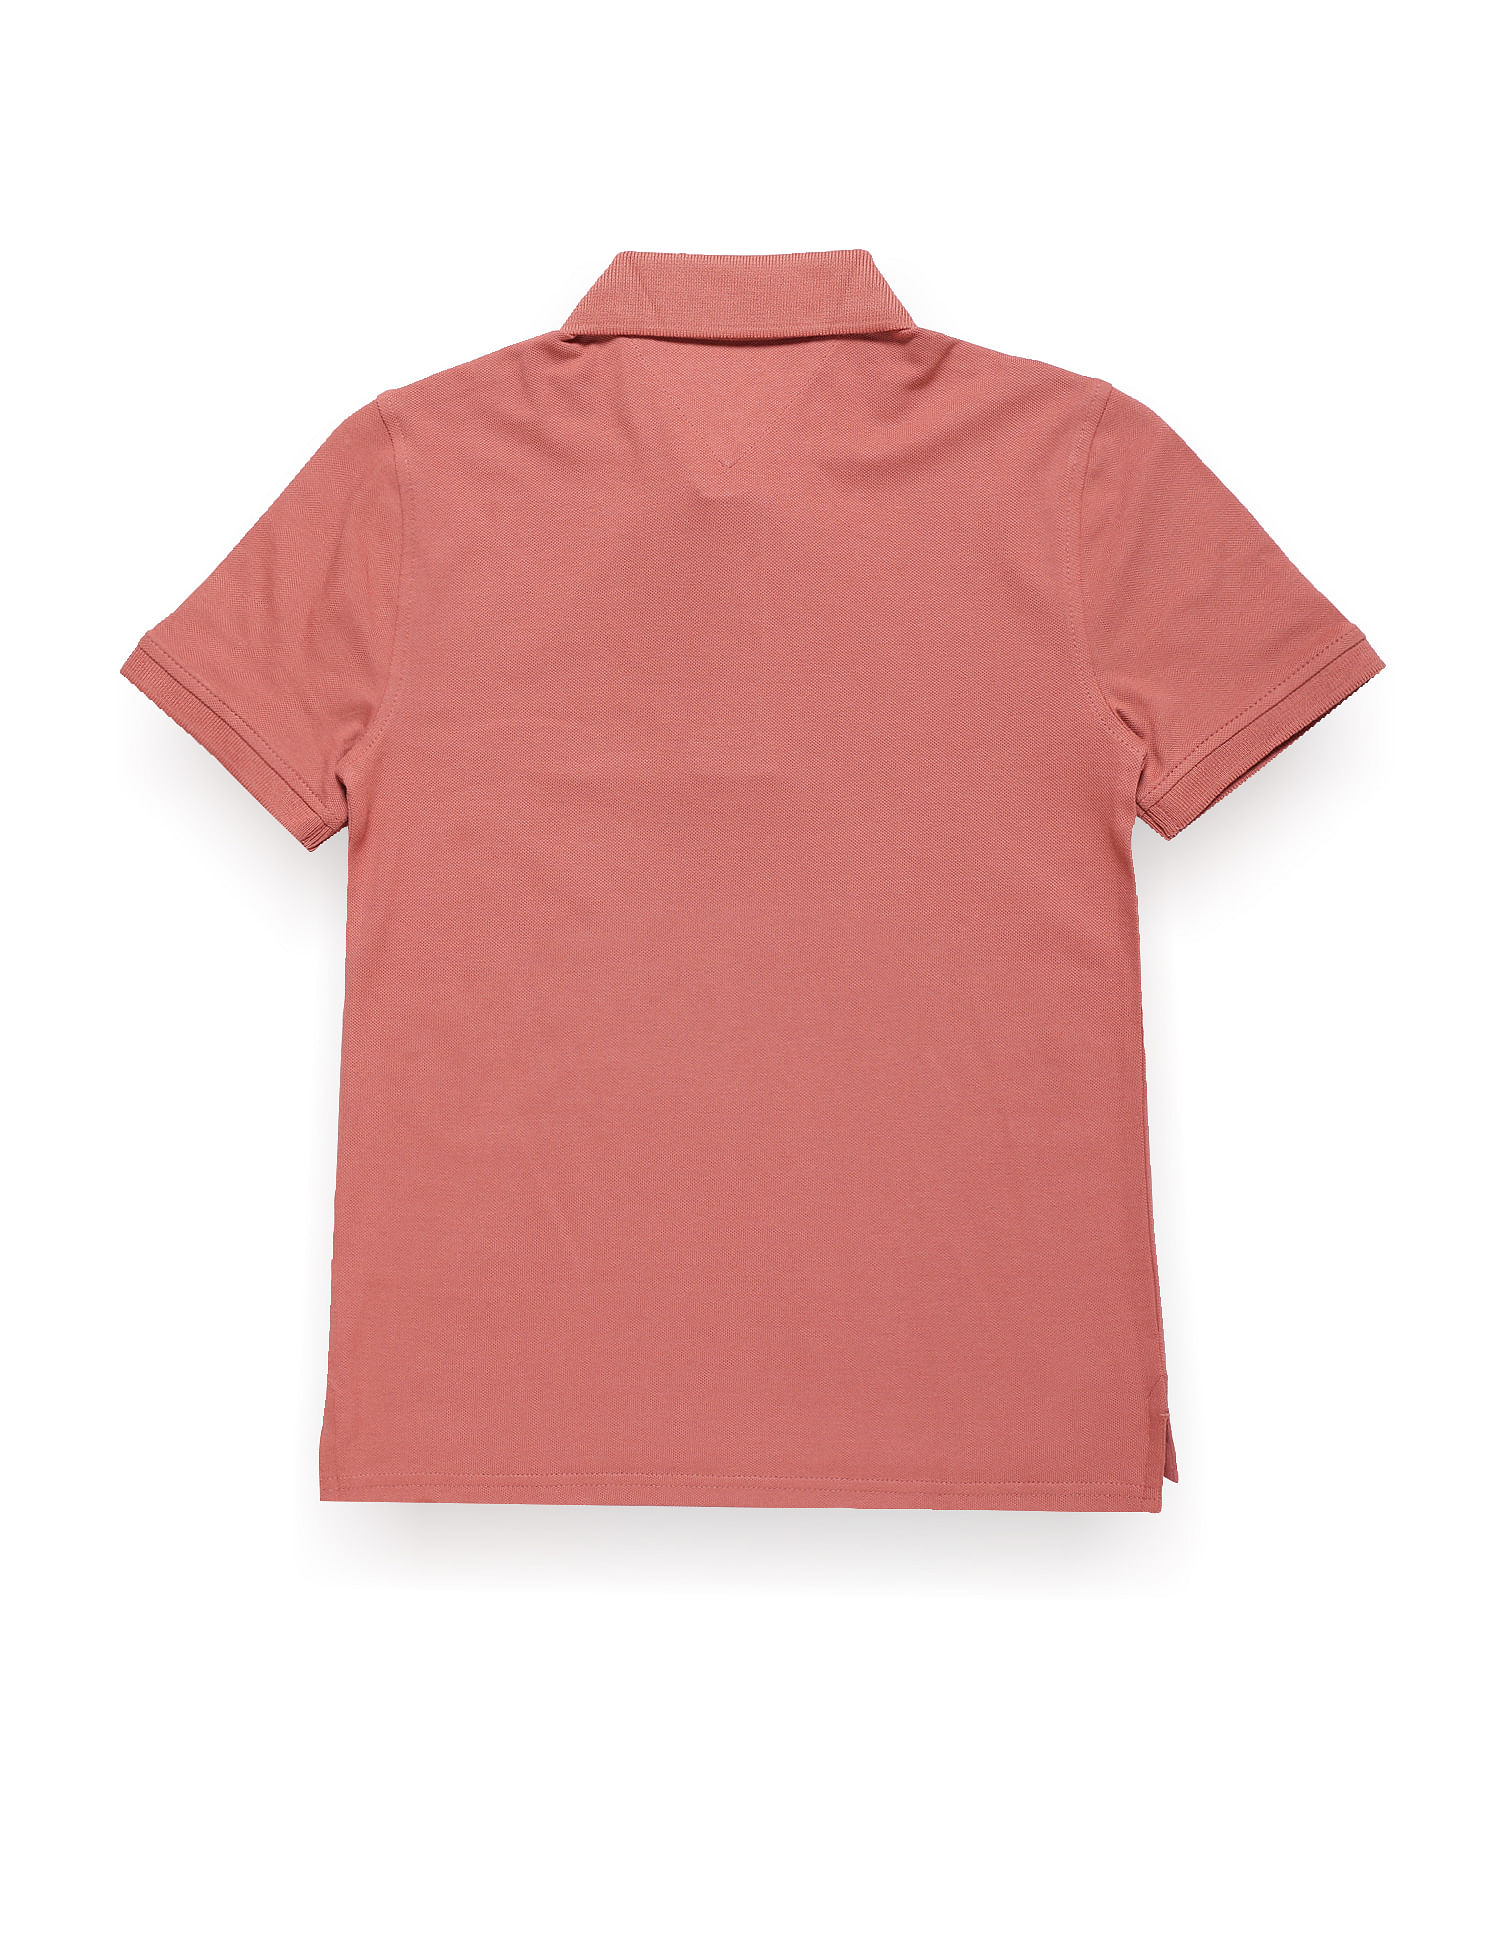 Tommy Hilfiger Men's Regular Fit Stretch Polo Shirt